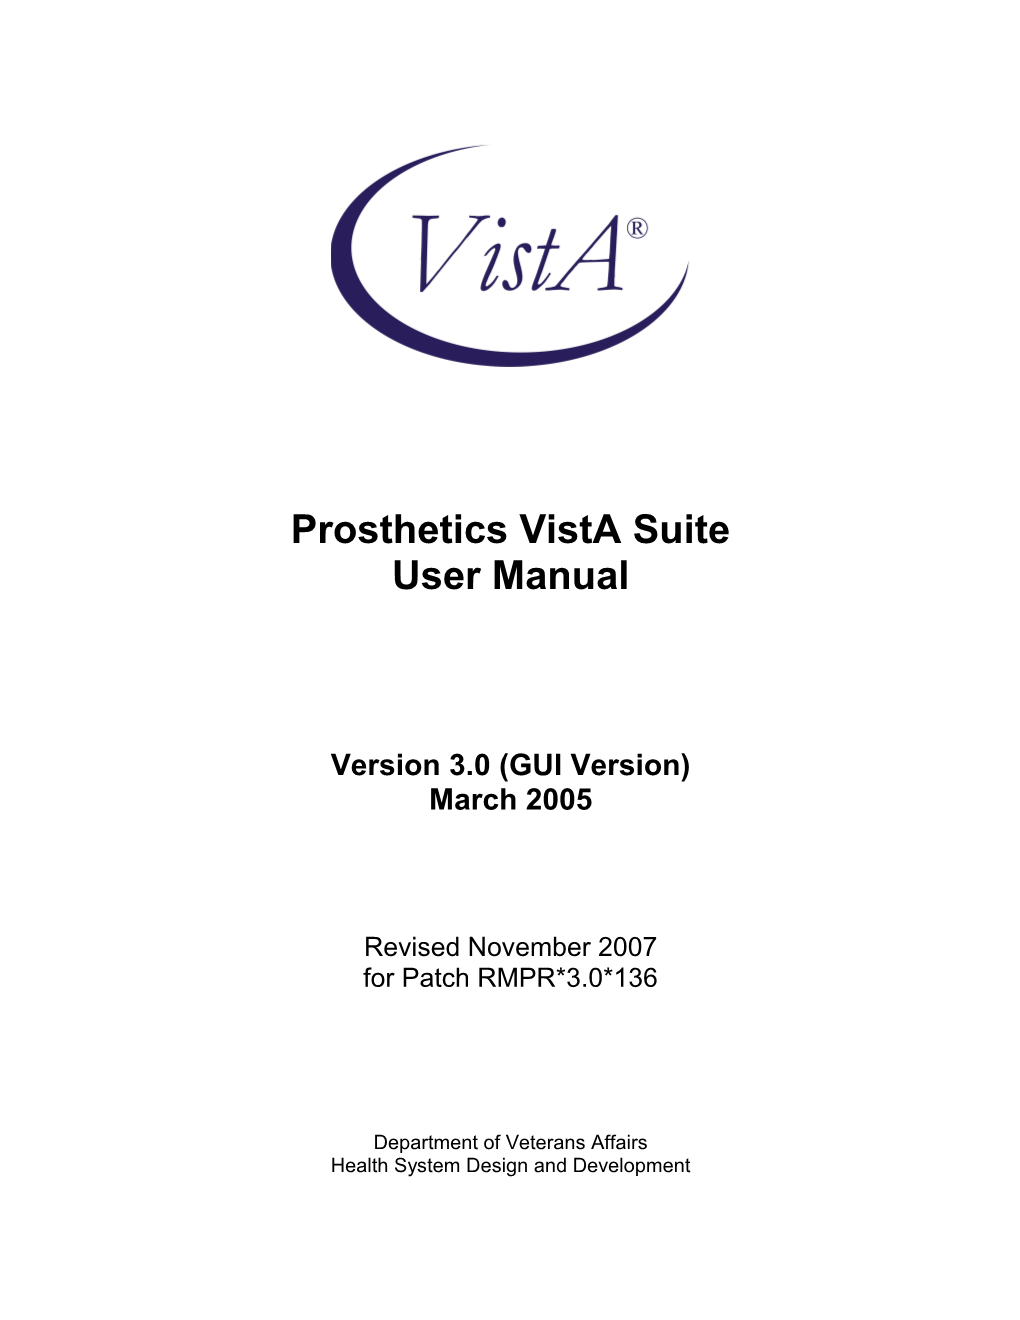 Prosthetics Vista Suite User Manual